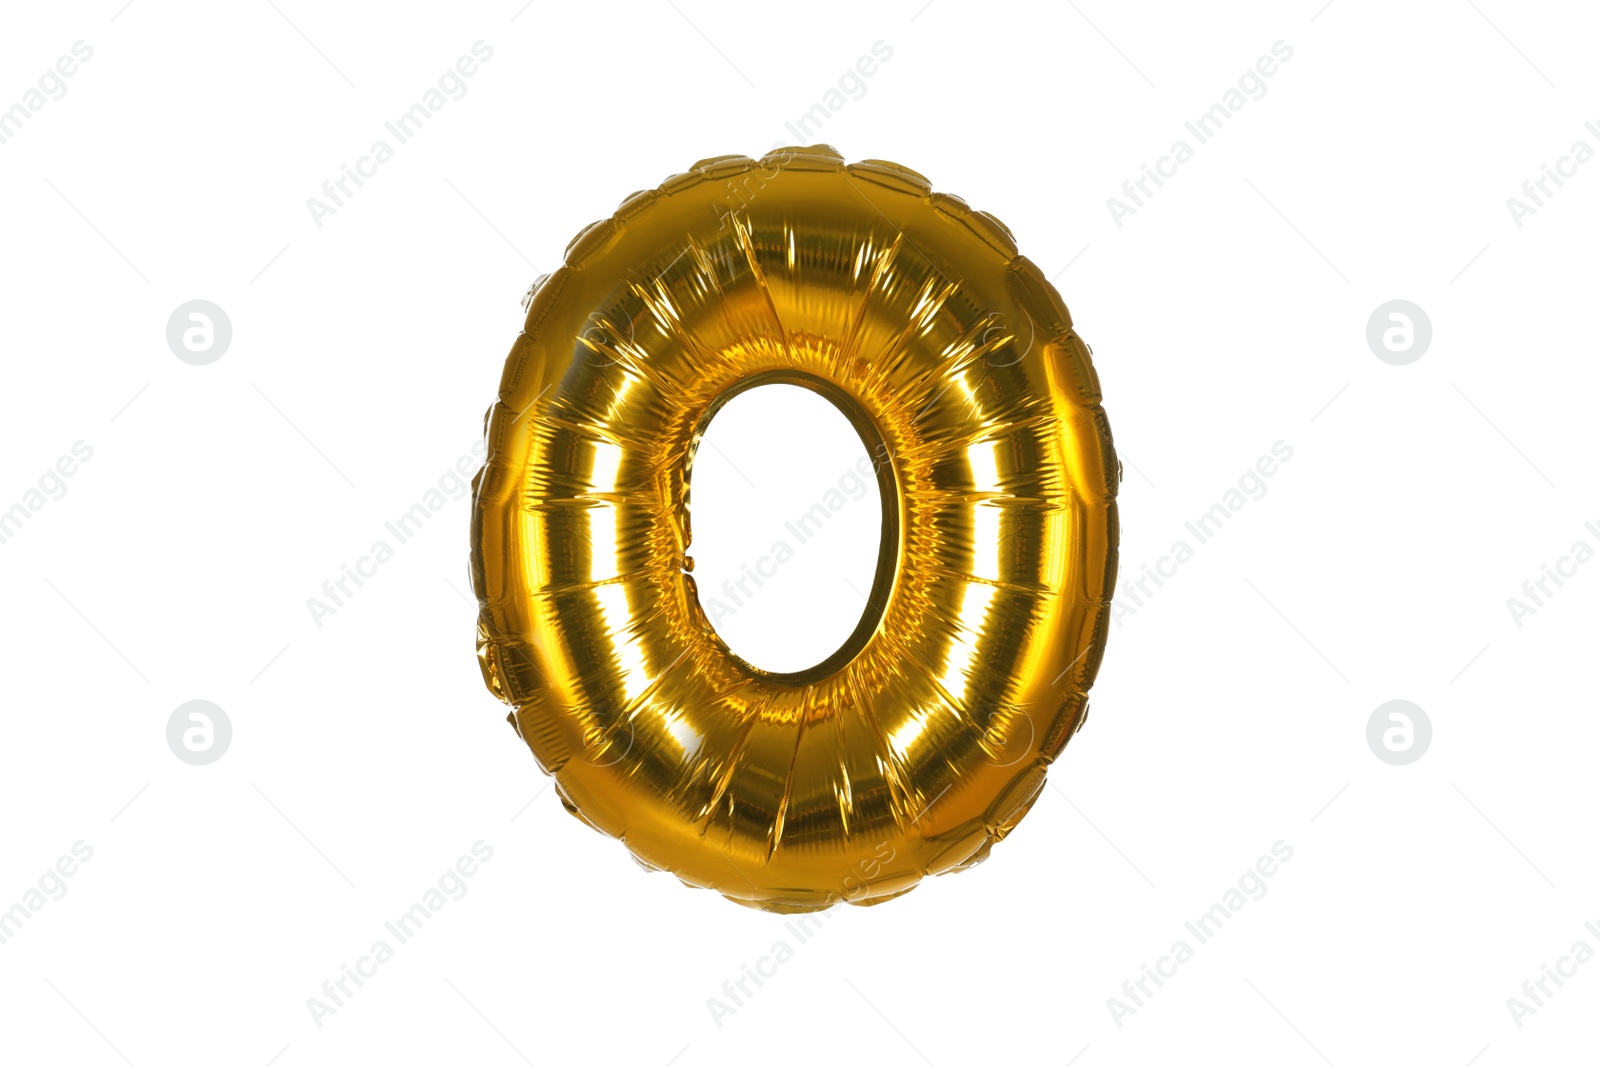 Photo of Golden letter O balloon on white background